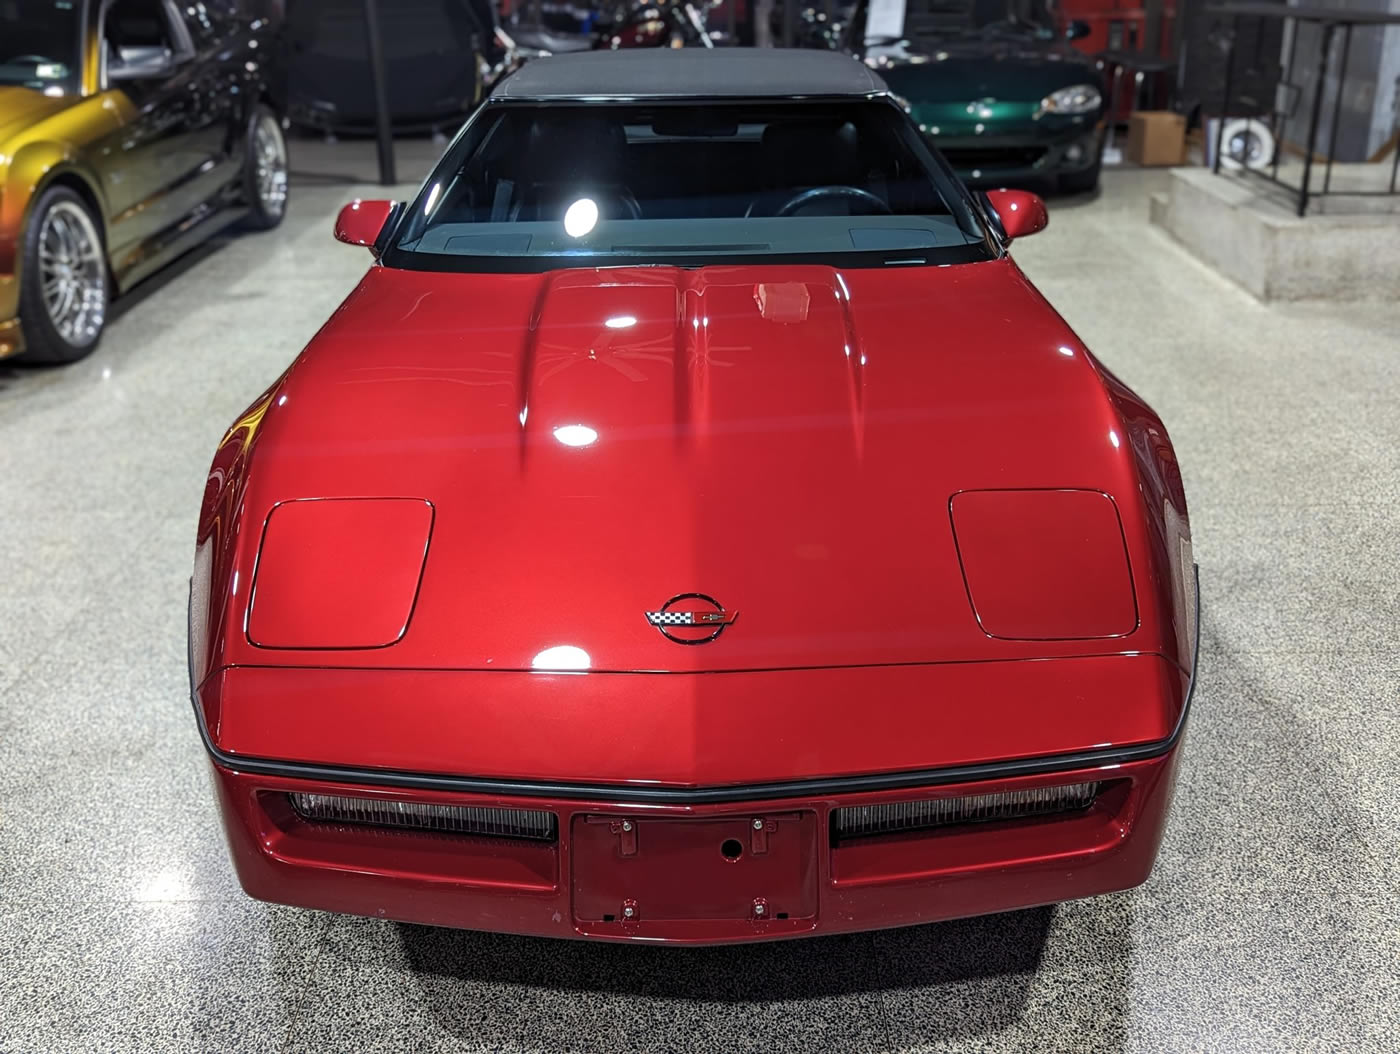 1989 Corvette Convertible in Dark Red Metallic